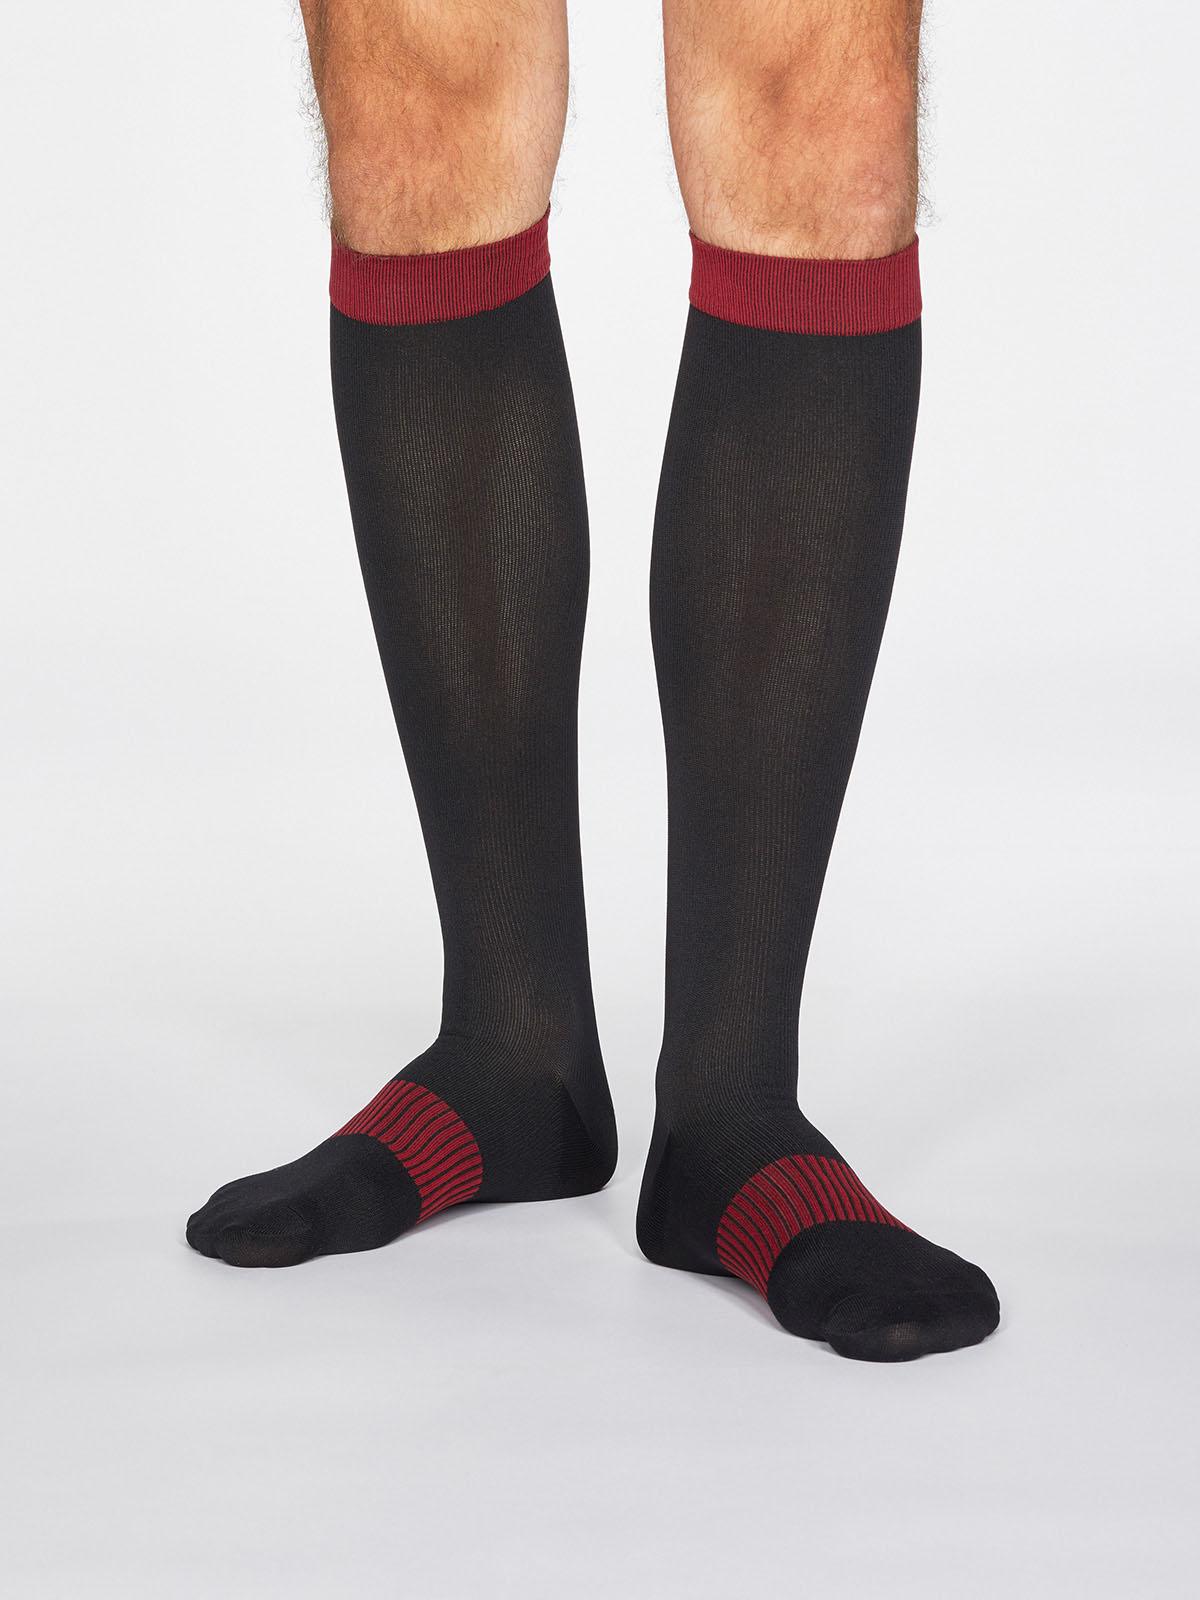 Declan Flight Socks - Black - Thought Clothing UK